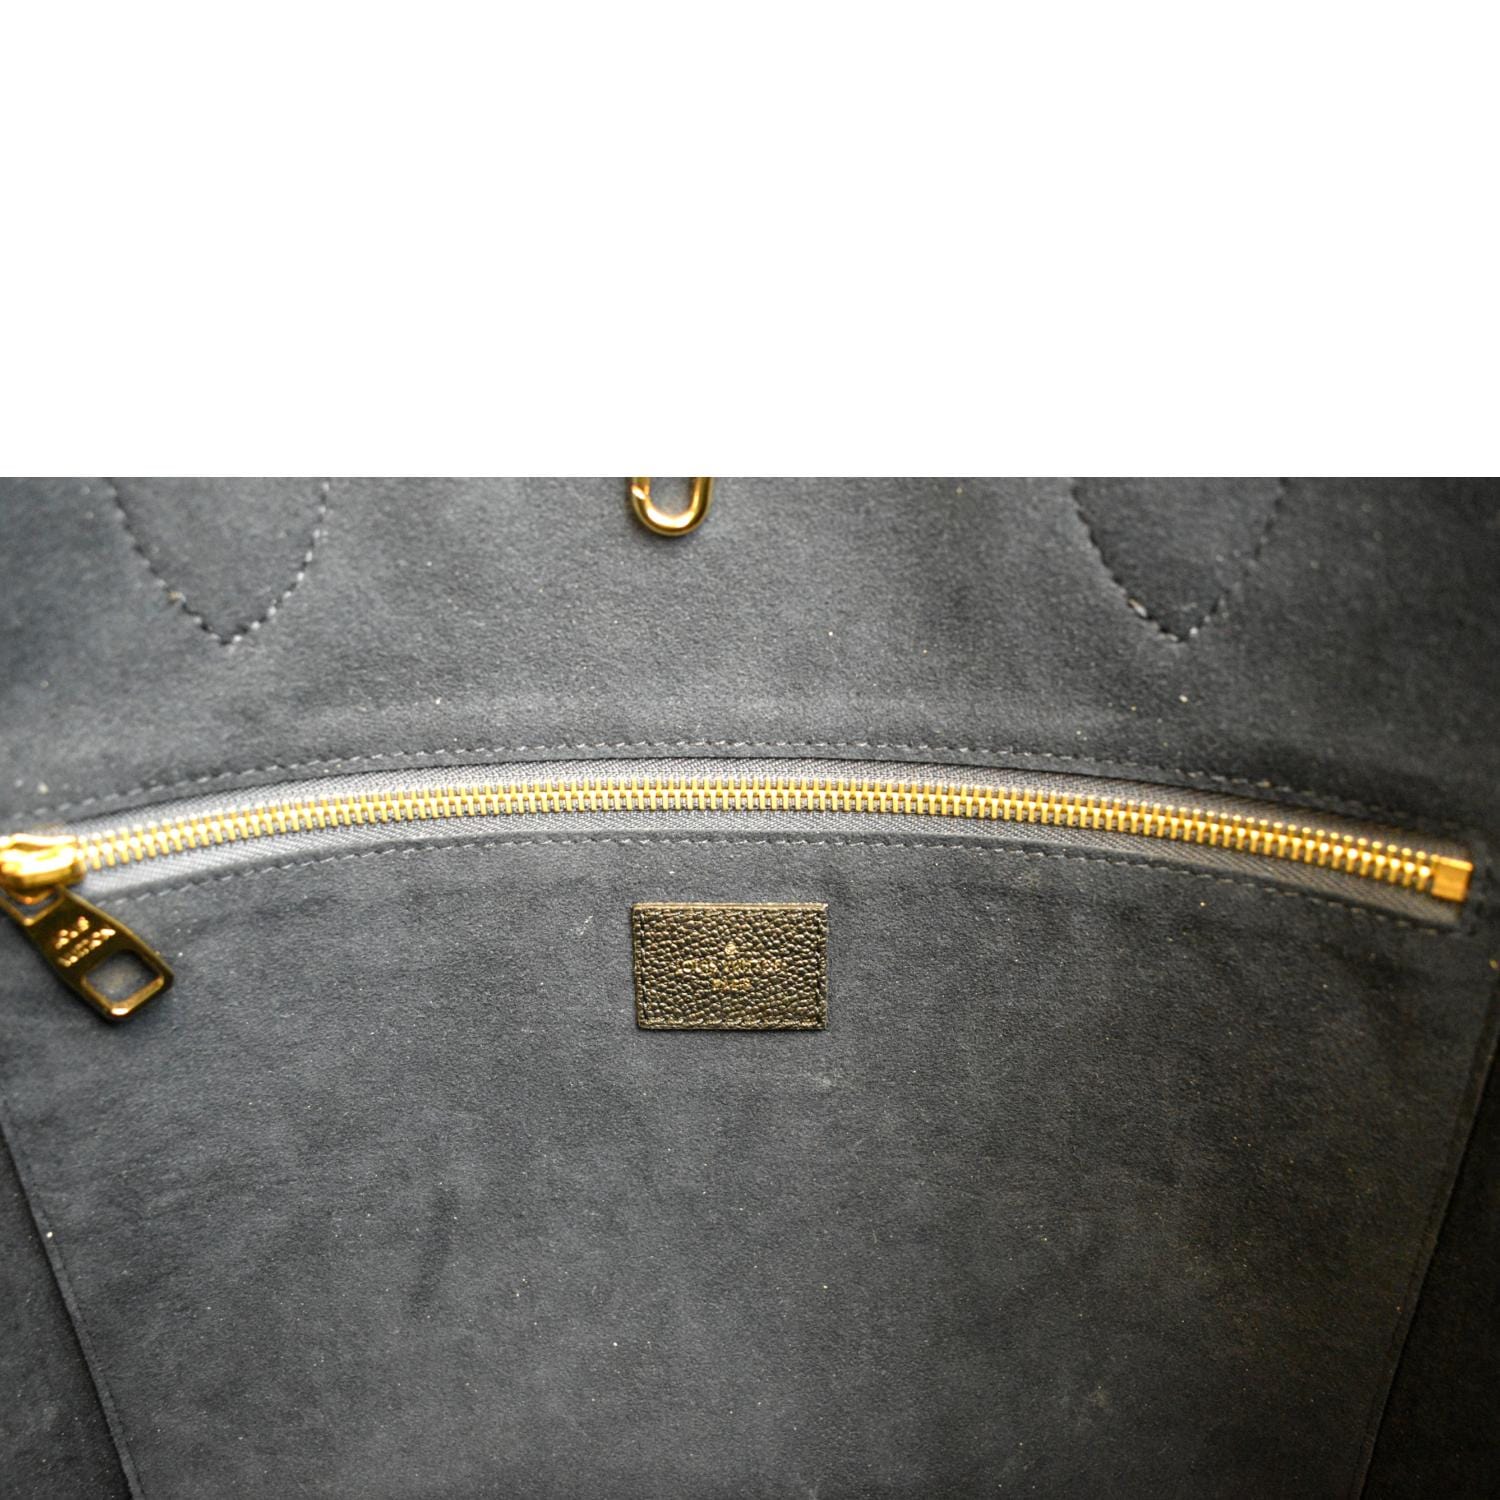 Louis+Vuitton+Neverfull+Tote+Bag+MM+Black+Monogram+Empreinte+Leather for  sale online